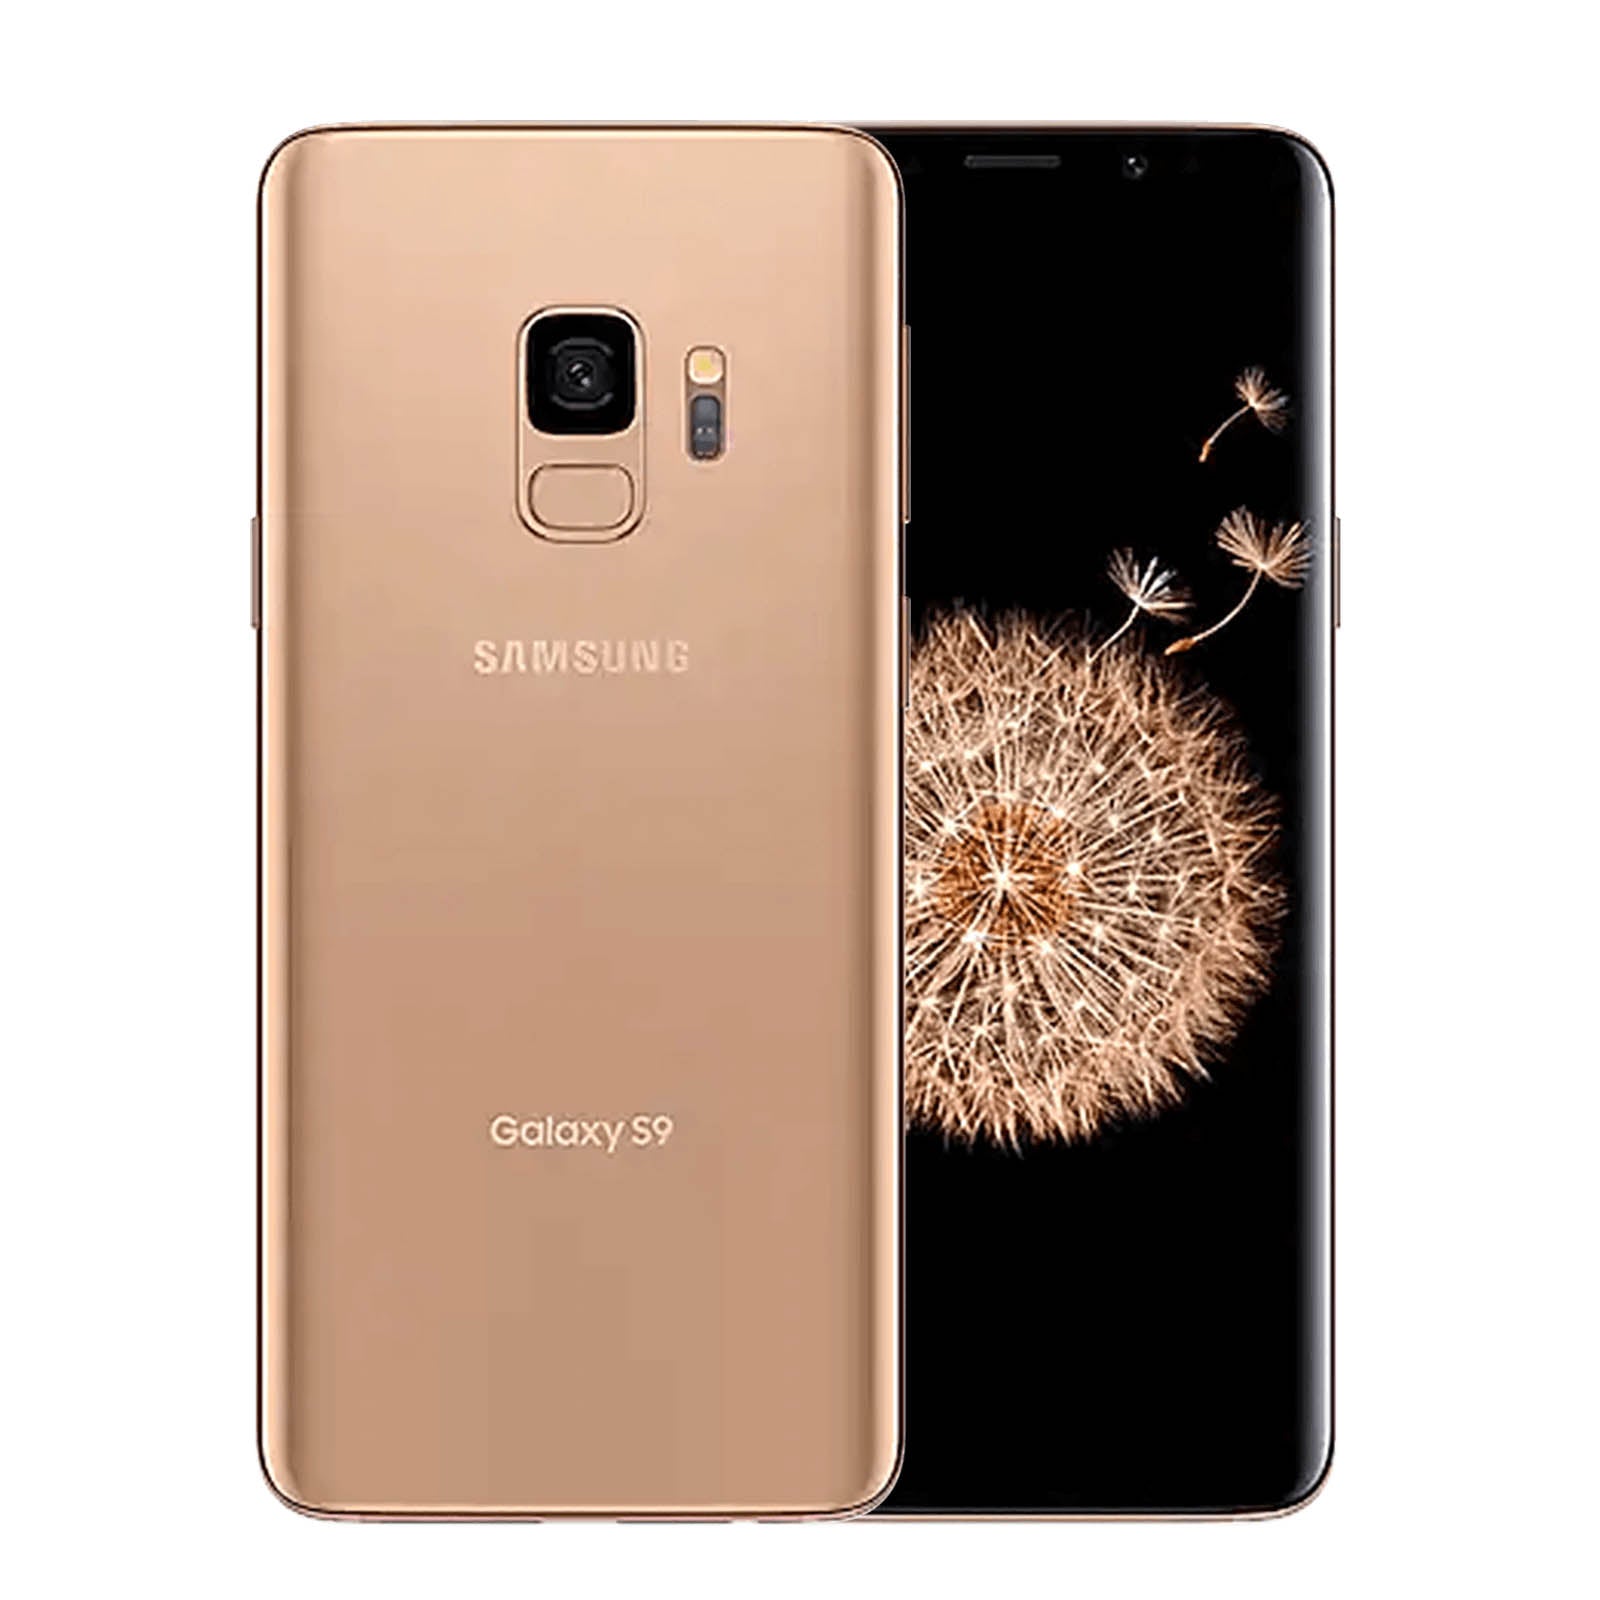 Samsung Galaxy S9 64GB Gold Very good - Unlocked